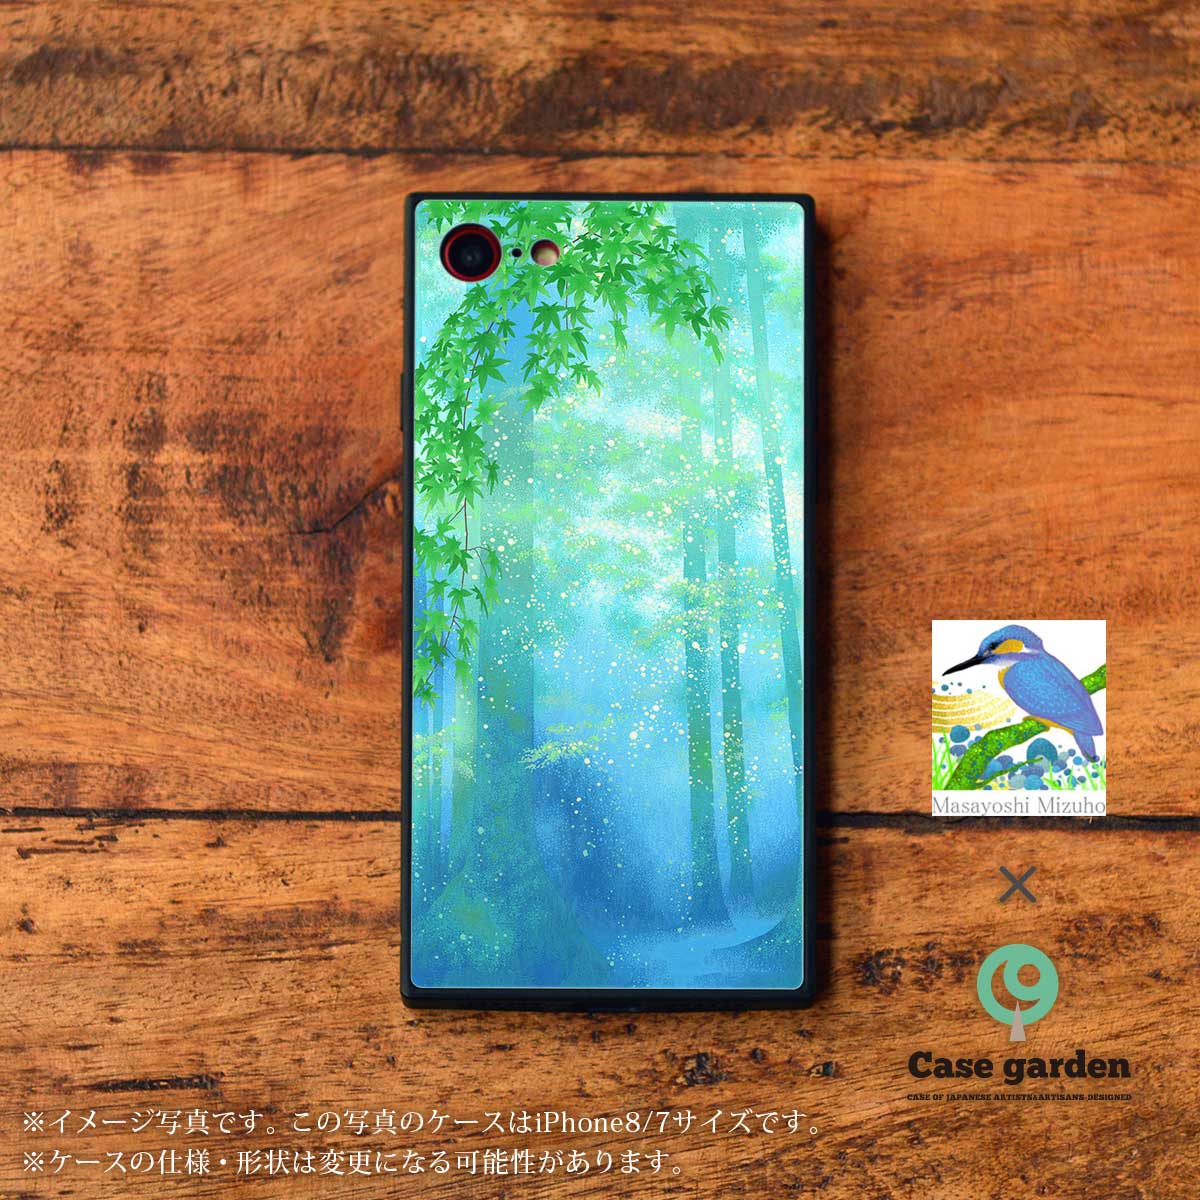 Masayoshi Mizuhoデザインの、キラキラと輝く背面カバーのガラスが美しいスクエア型強化ガラススマホケース「雨あがる」です。写真の機種はiPhoneXRです。